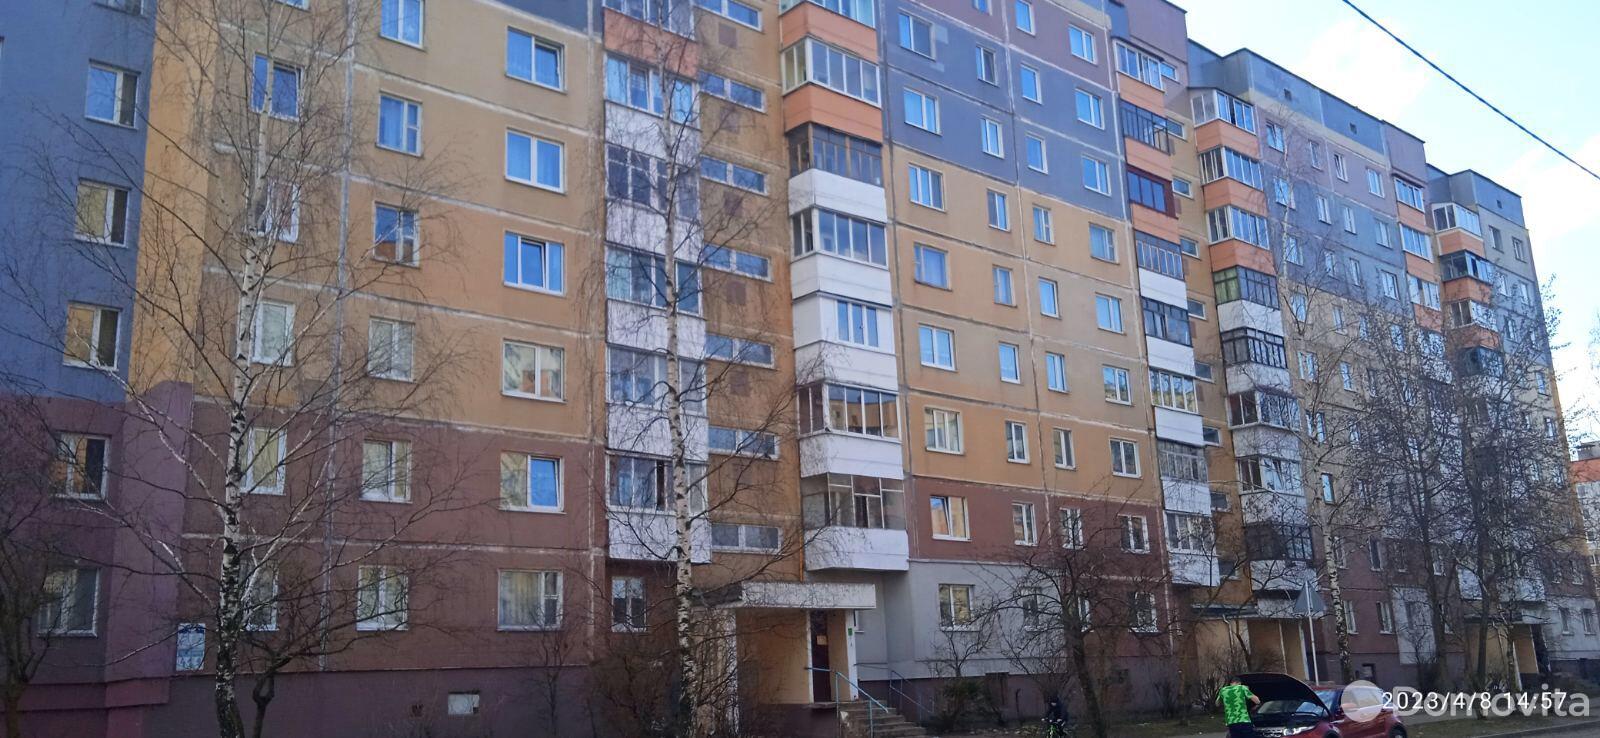 квартира, Витебск, ул. Чкалова, д. 41/1, стоимость продажи 129 932 р.